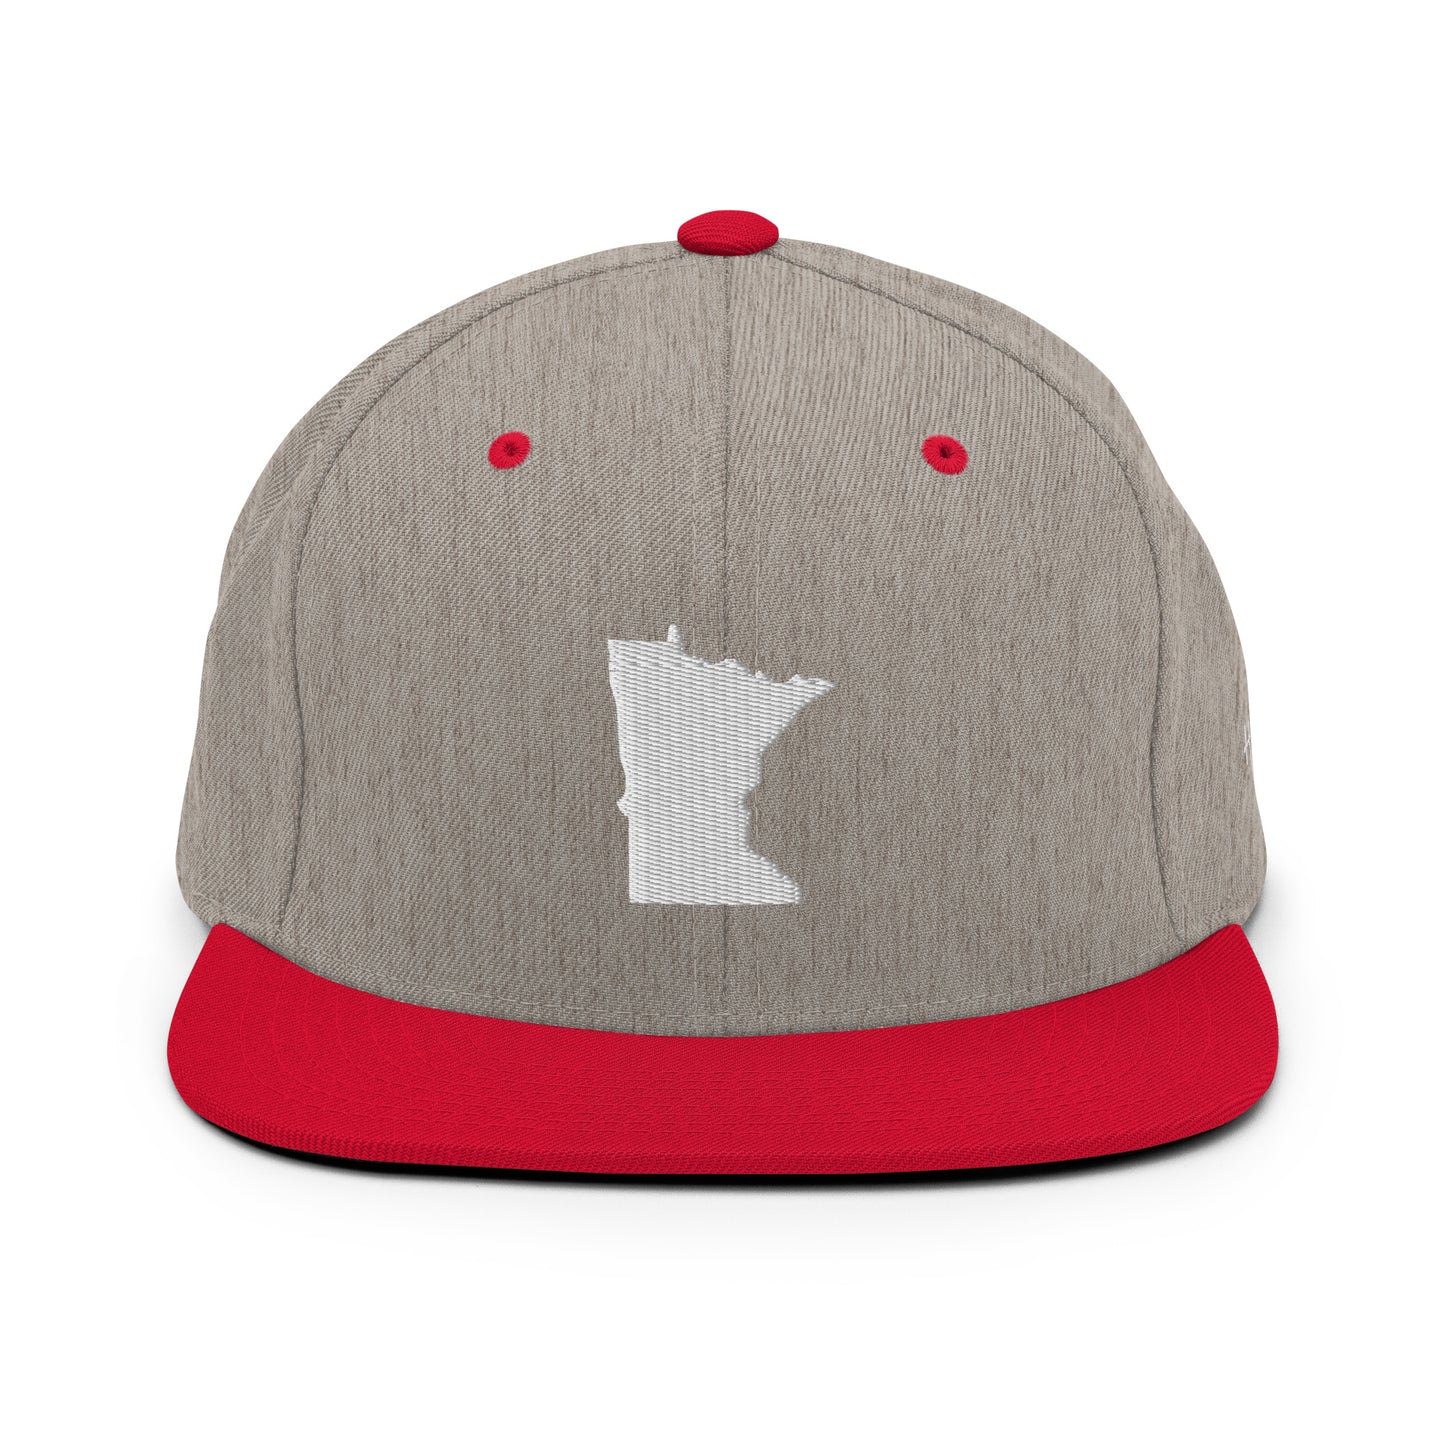 Minnesota State Silhouette 6 Panel Snapback Hat